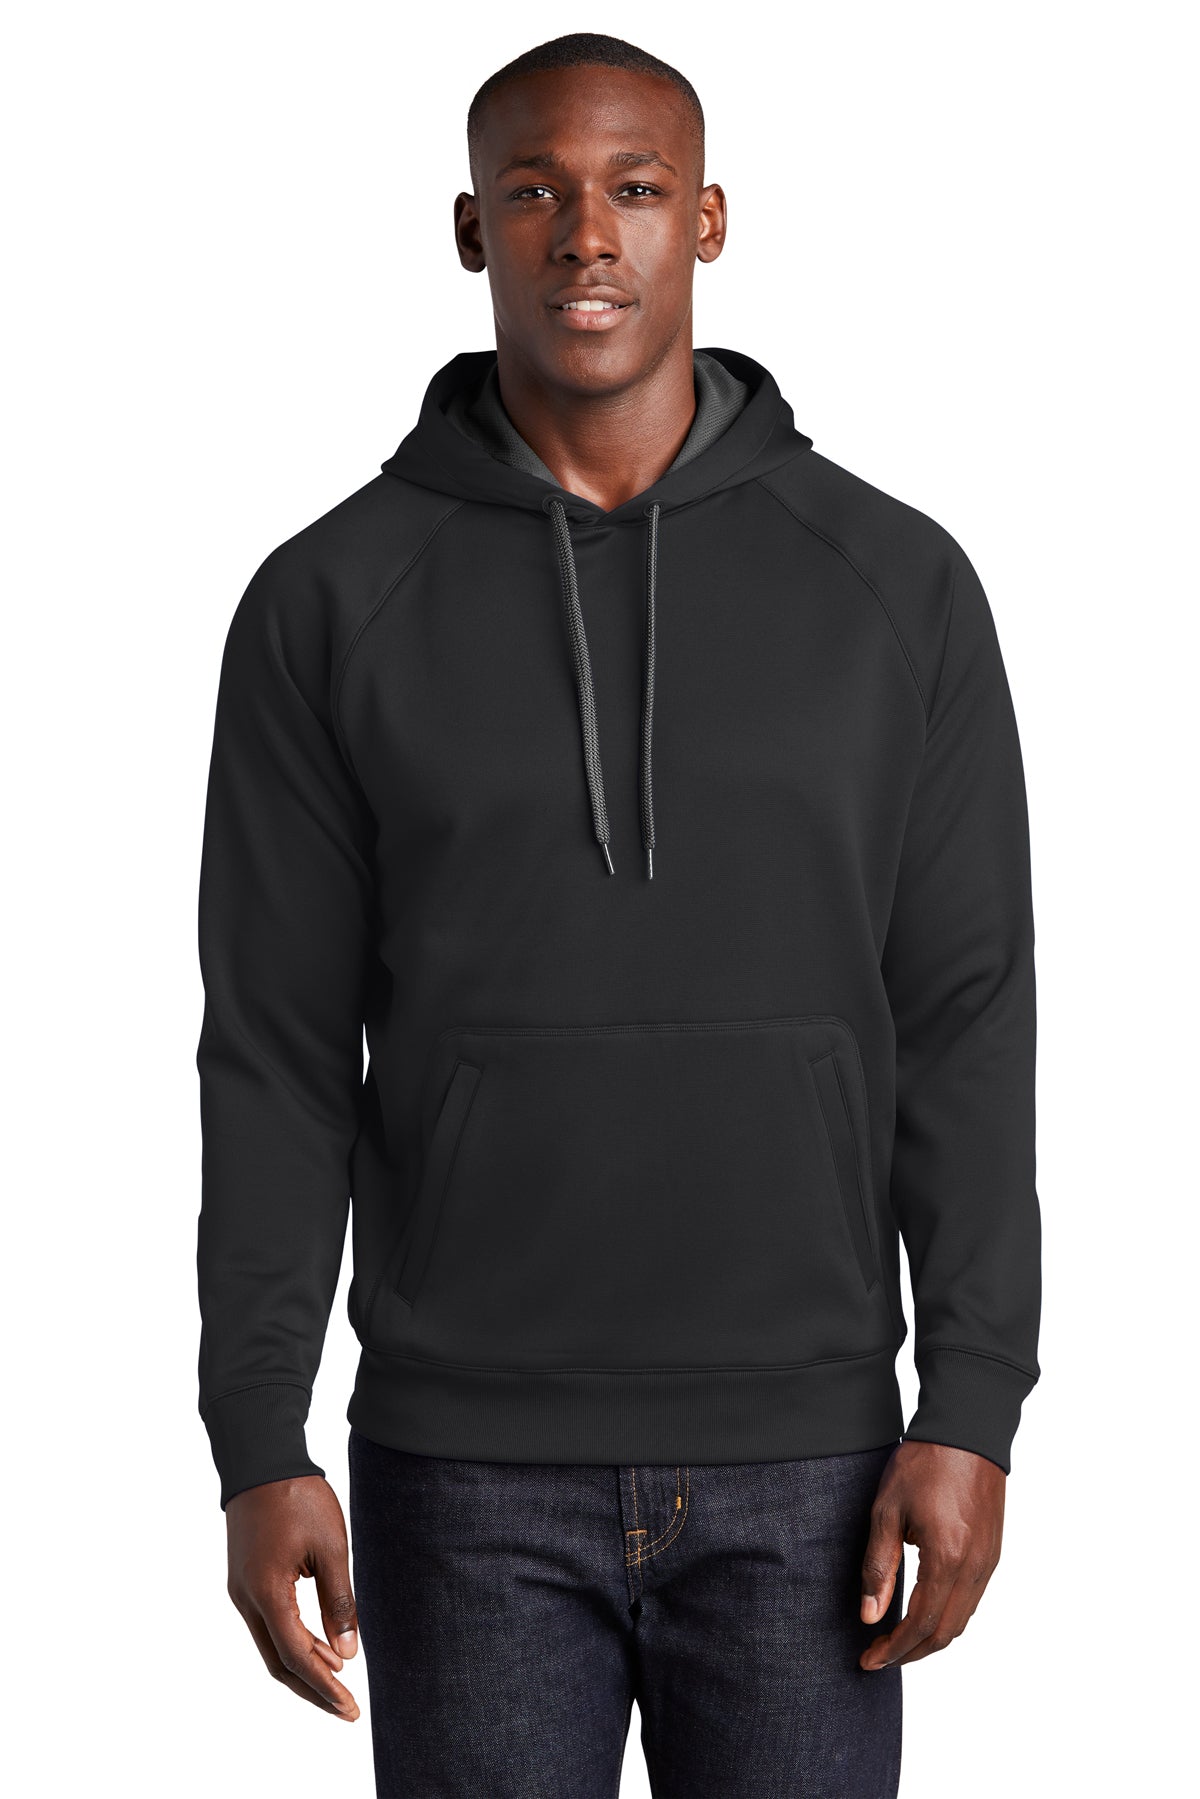 USASMDC Logo Sport-Tek® Tech Fleece Hooded Sweatshirt - ST250 – Gold ...